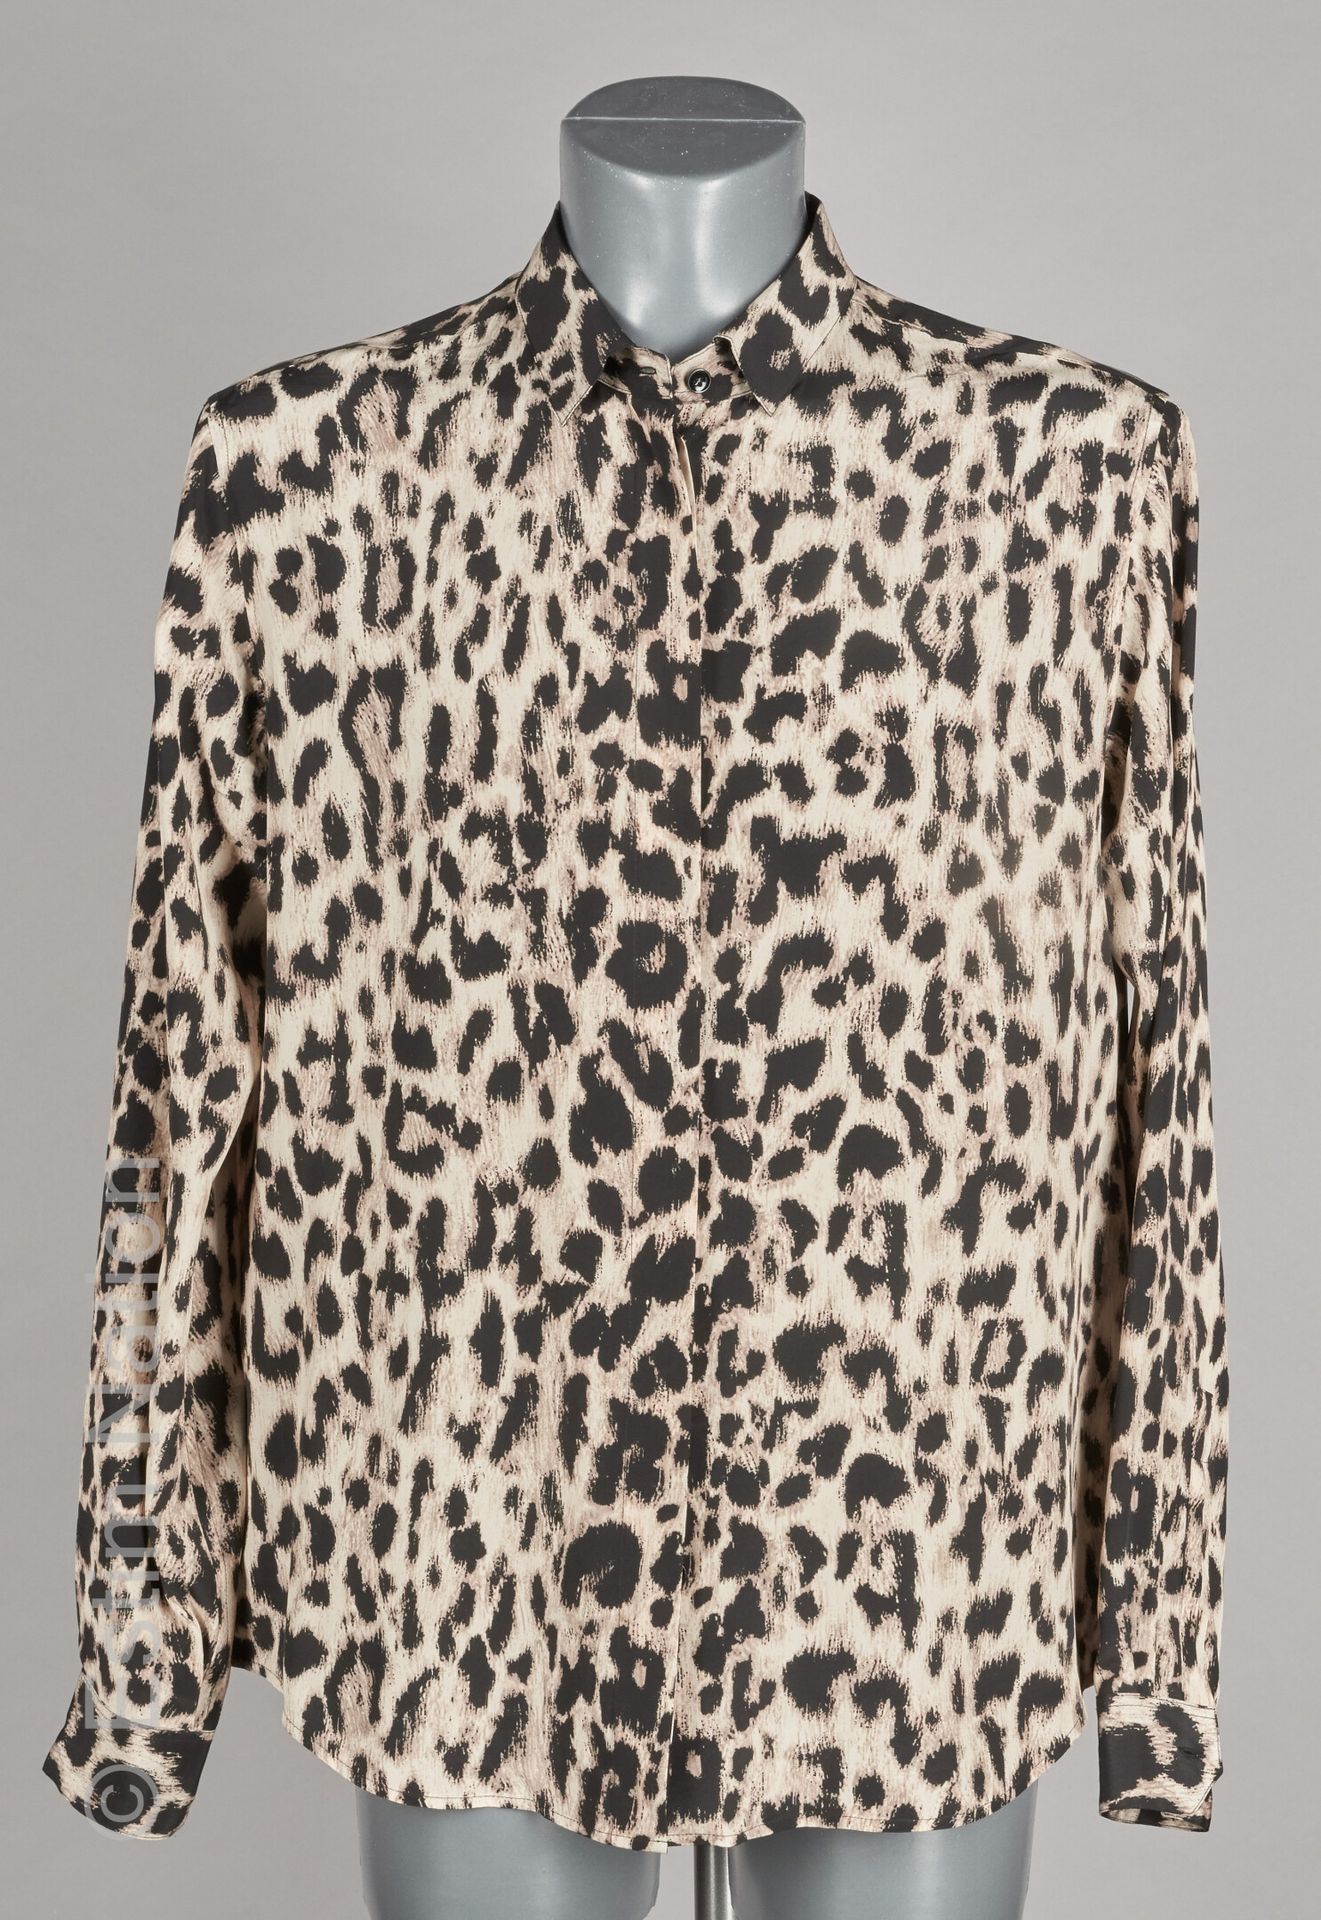 SAINT LAURENT PARIS (2017) Camicia di seta con stampa leopardo (Taglie 44)